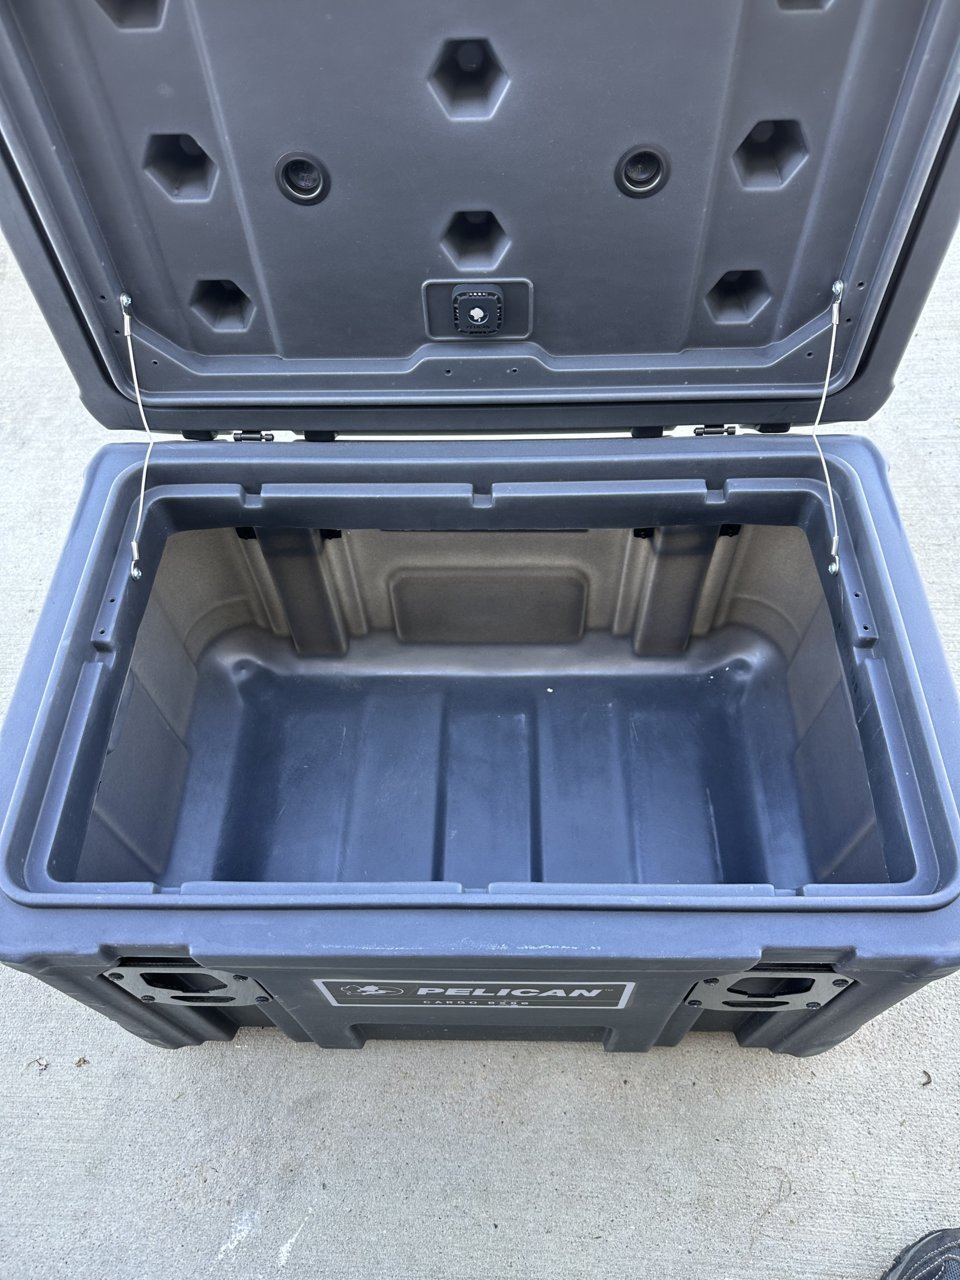 Pelican Cargo Case BX80 | Toyota 4Runner Forum [4Runners.com]